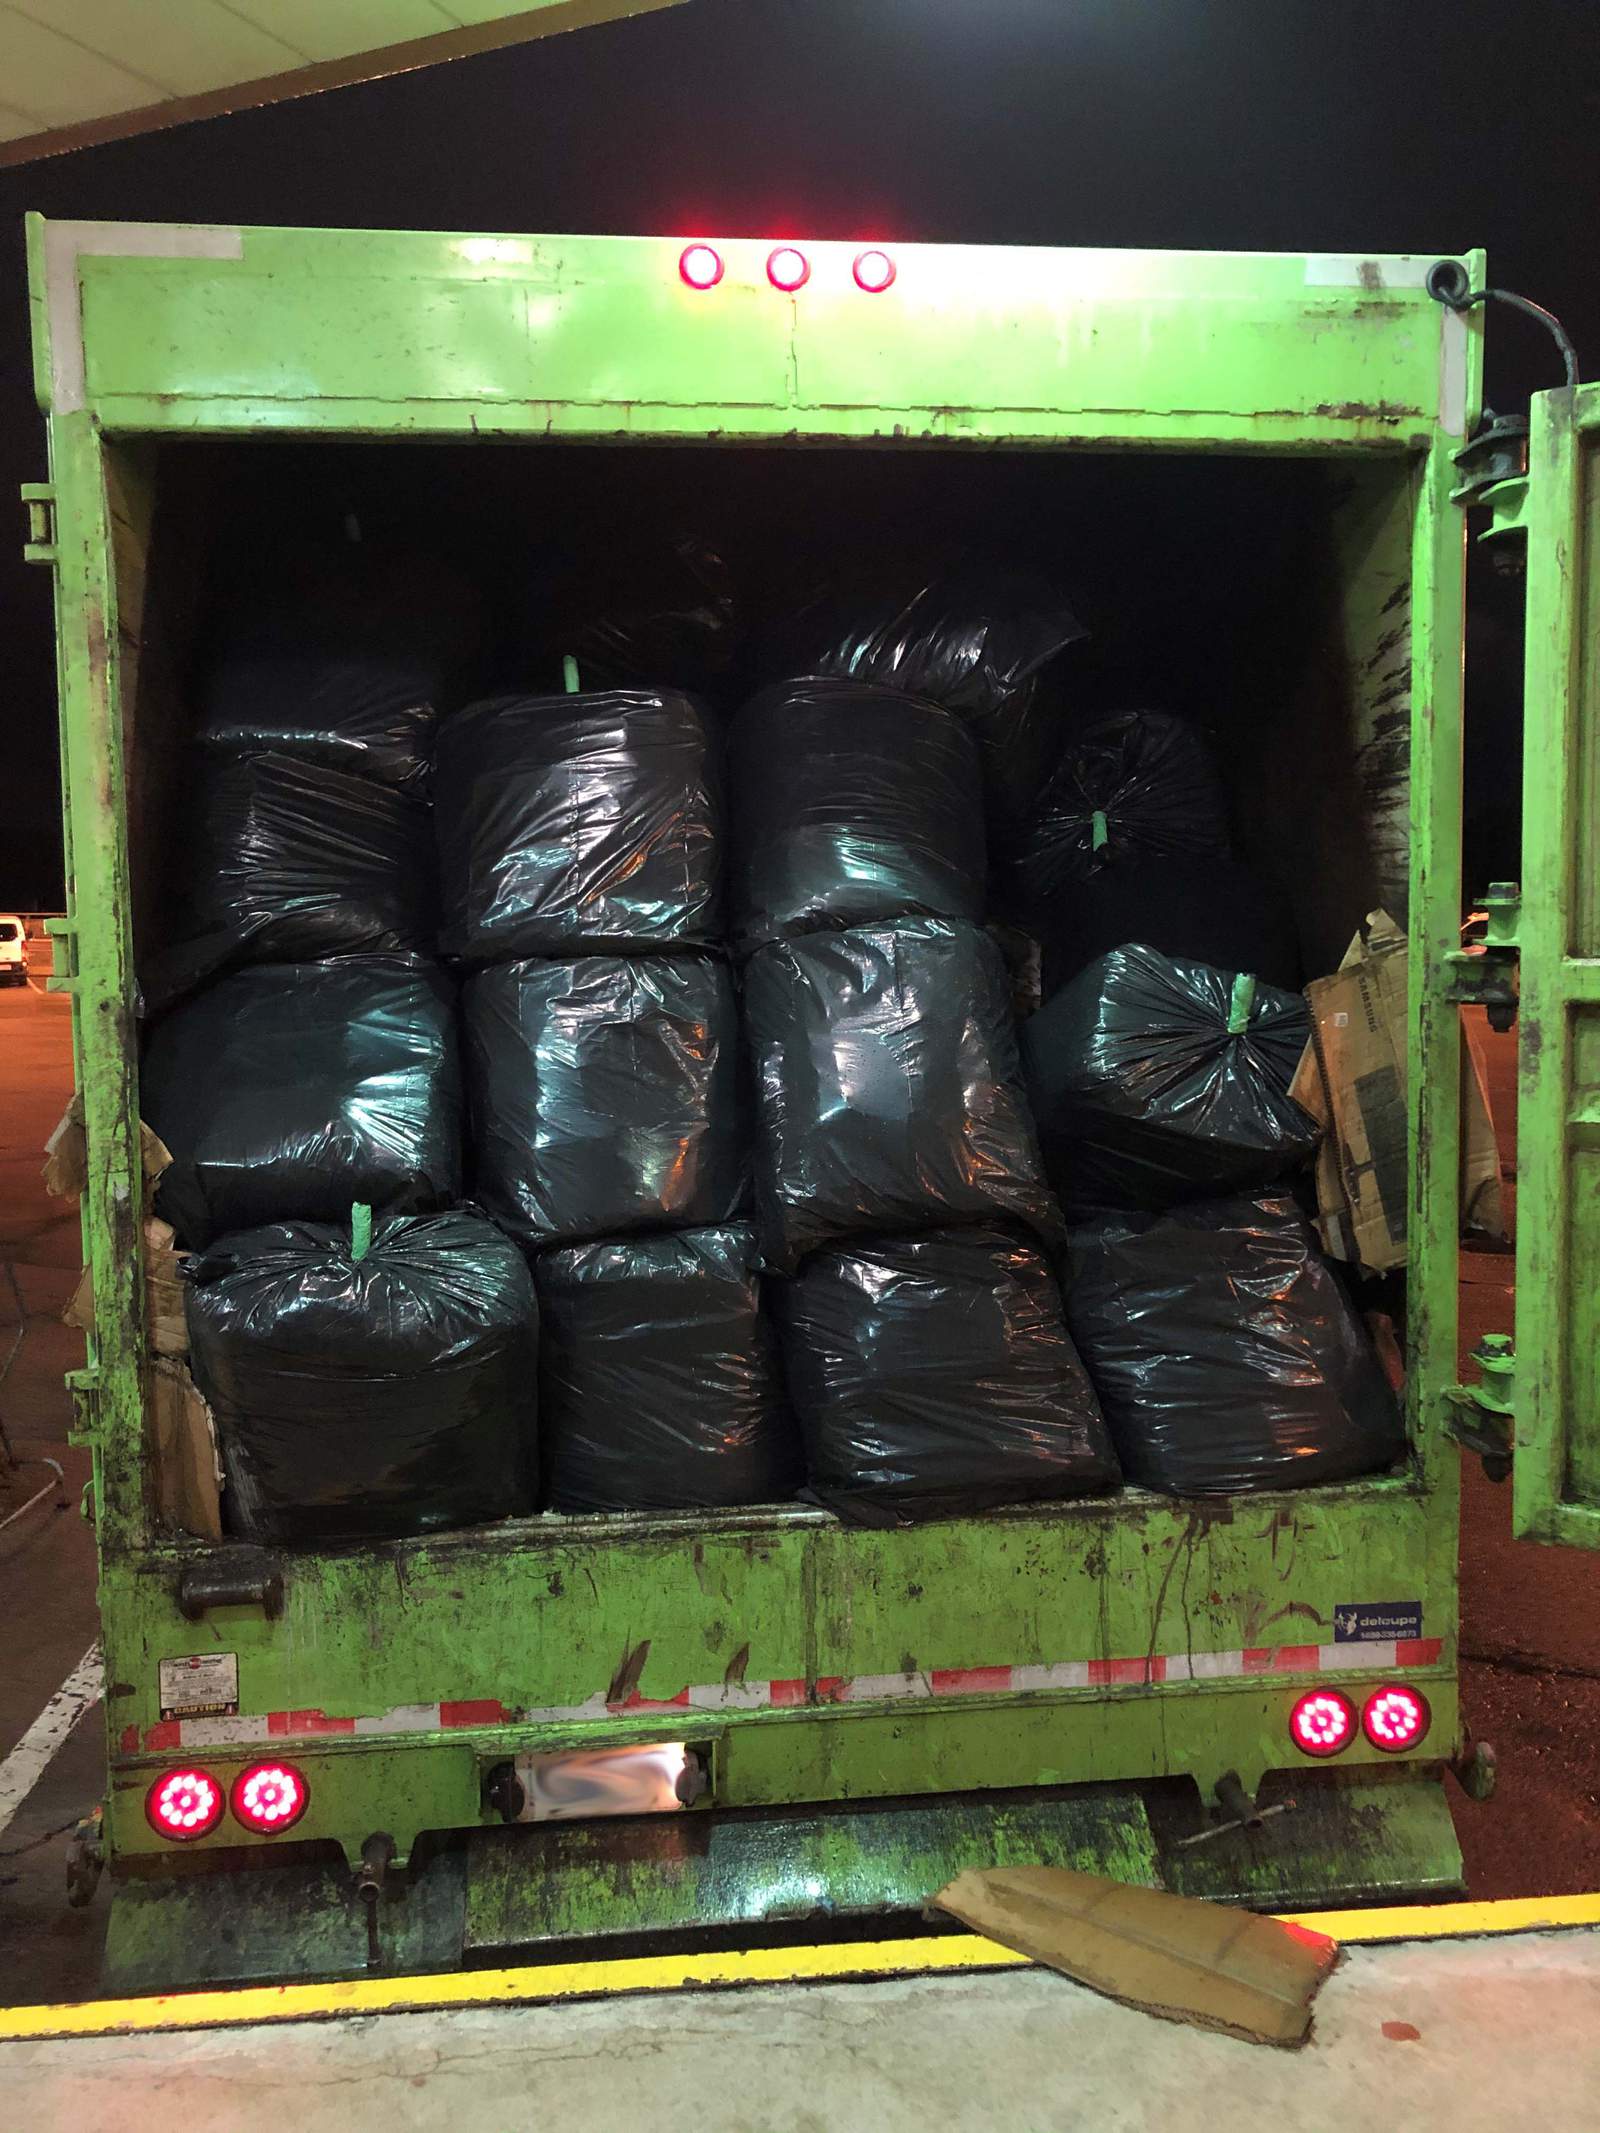 Over half ton of marijuana seized from trash hauler at Blue Water Bridge in Port Huron